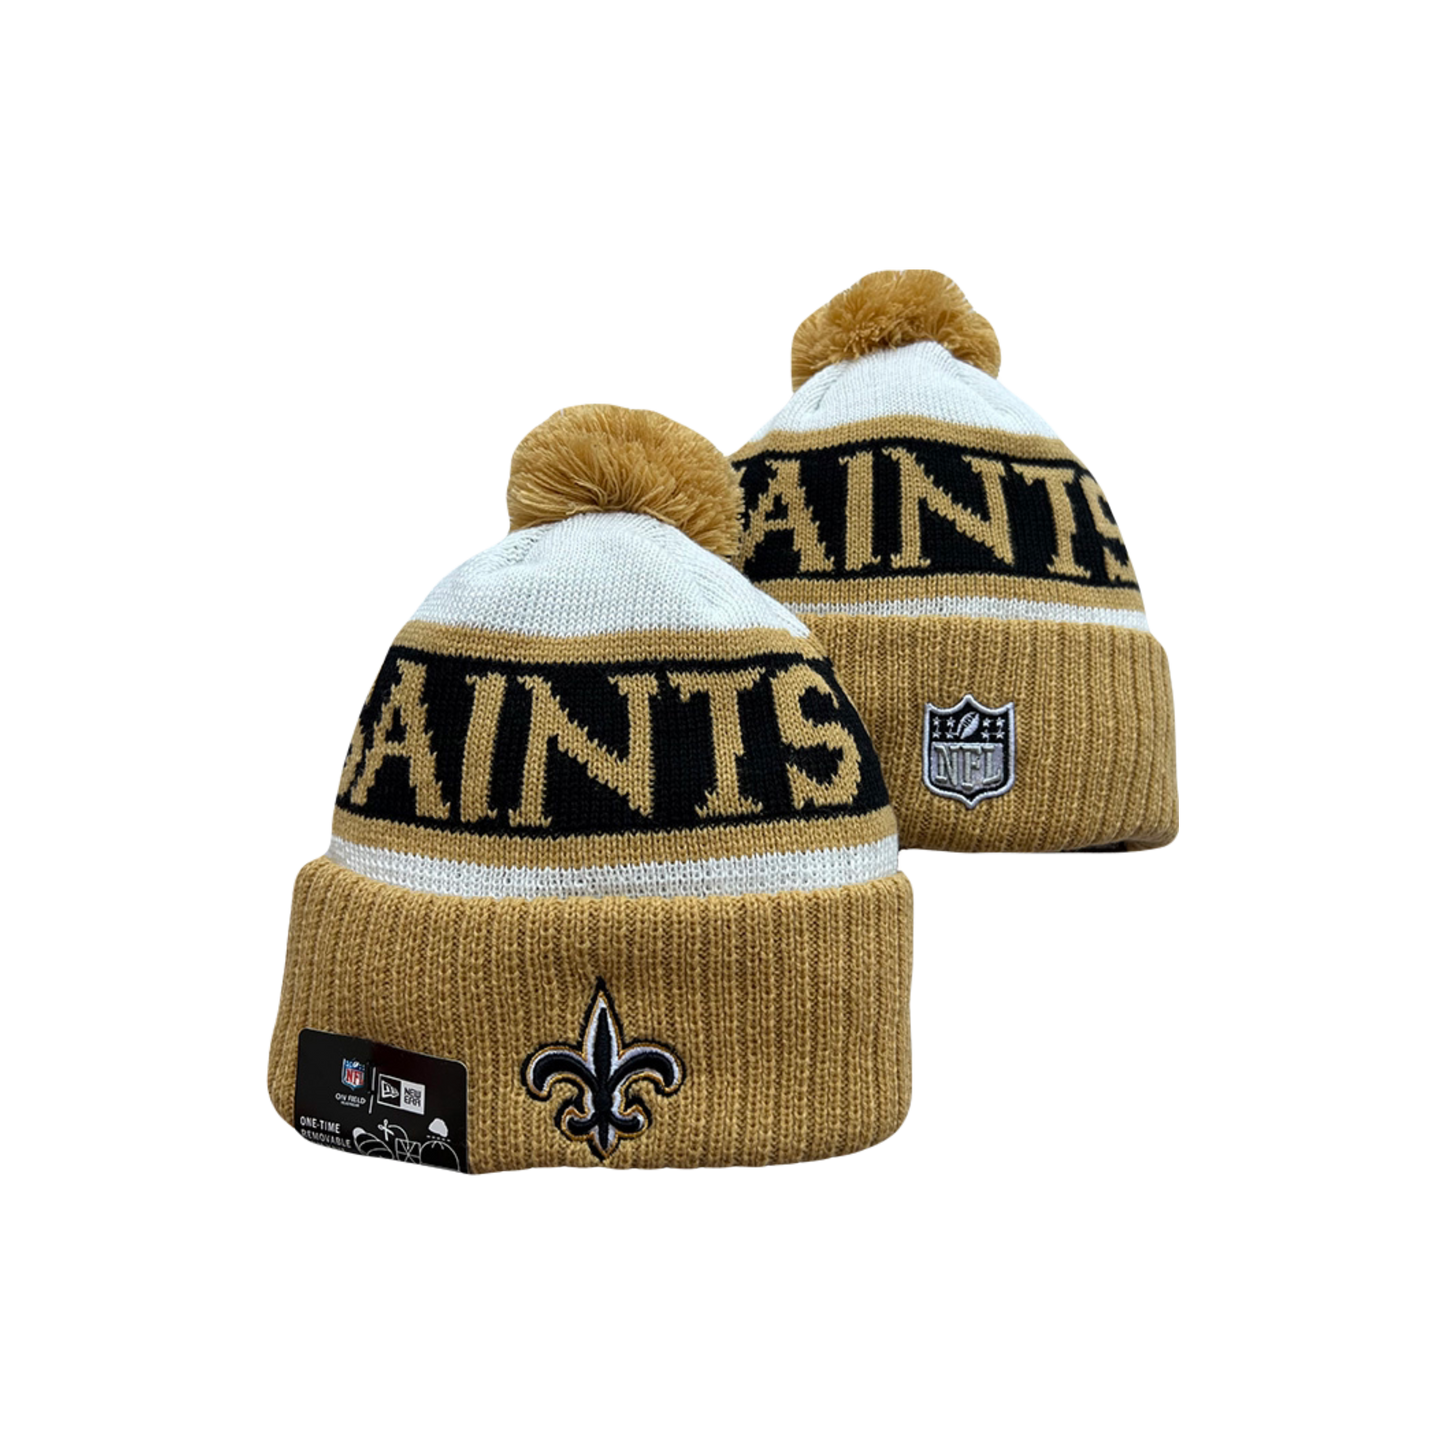 New Orleans Saints NFL New Era ‘Saints Support’ Knit Beanie